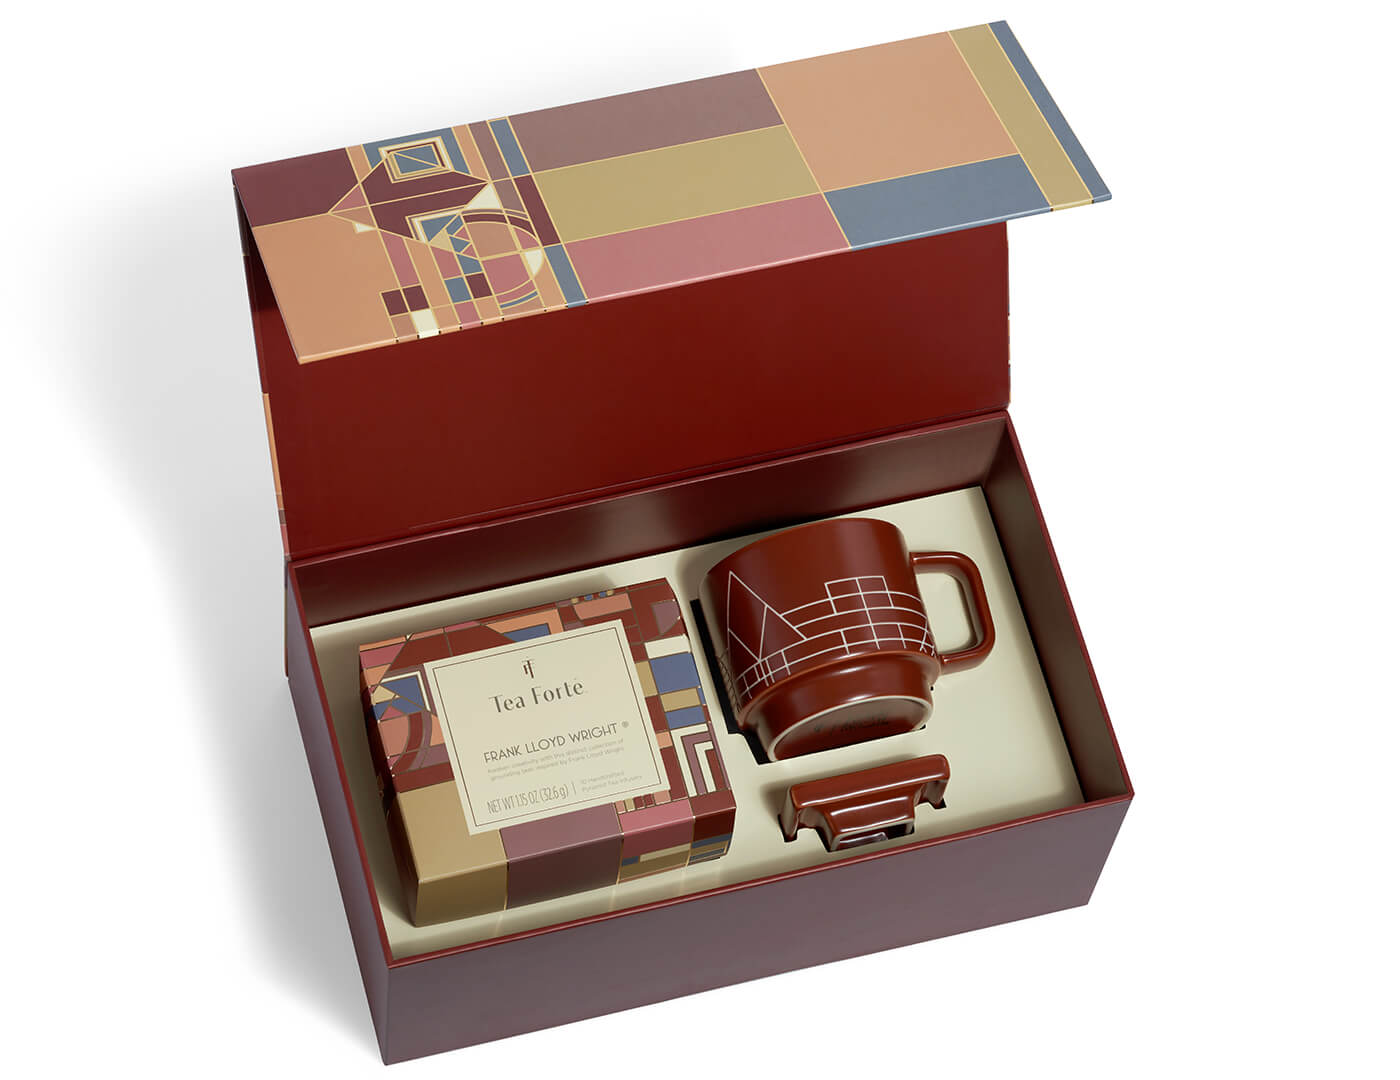 Frank Lloyd Wright Gift Set, box open